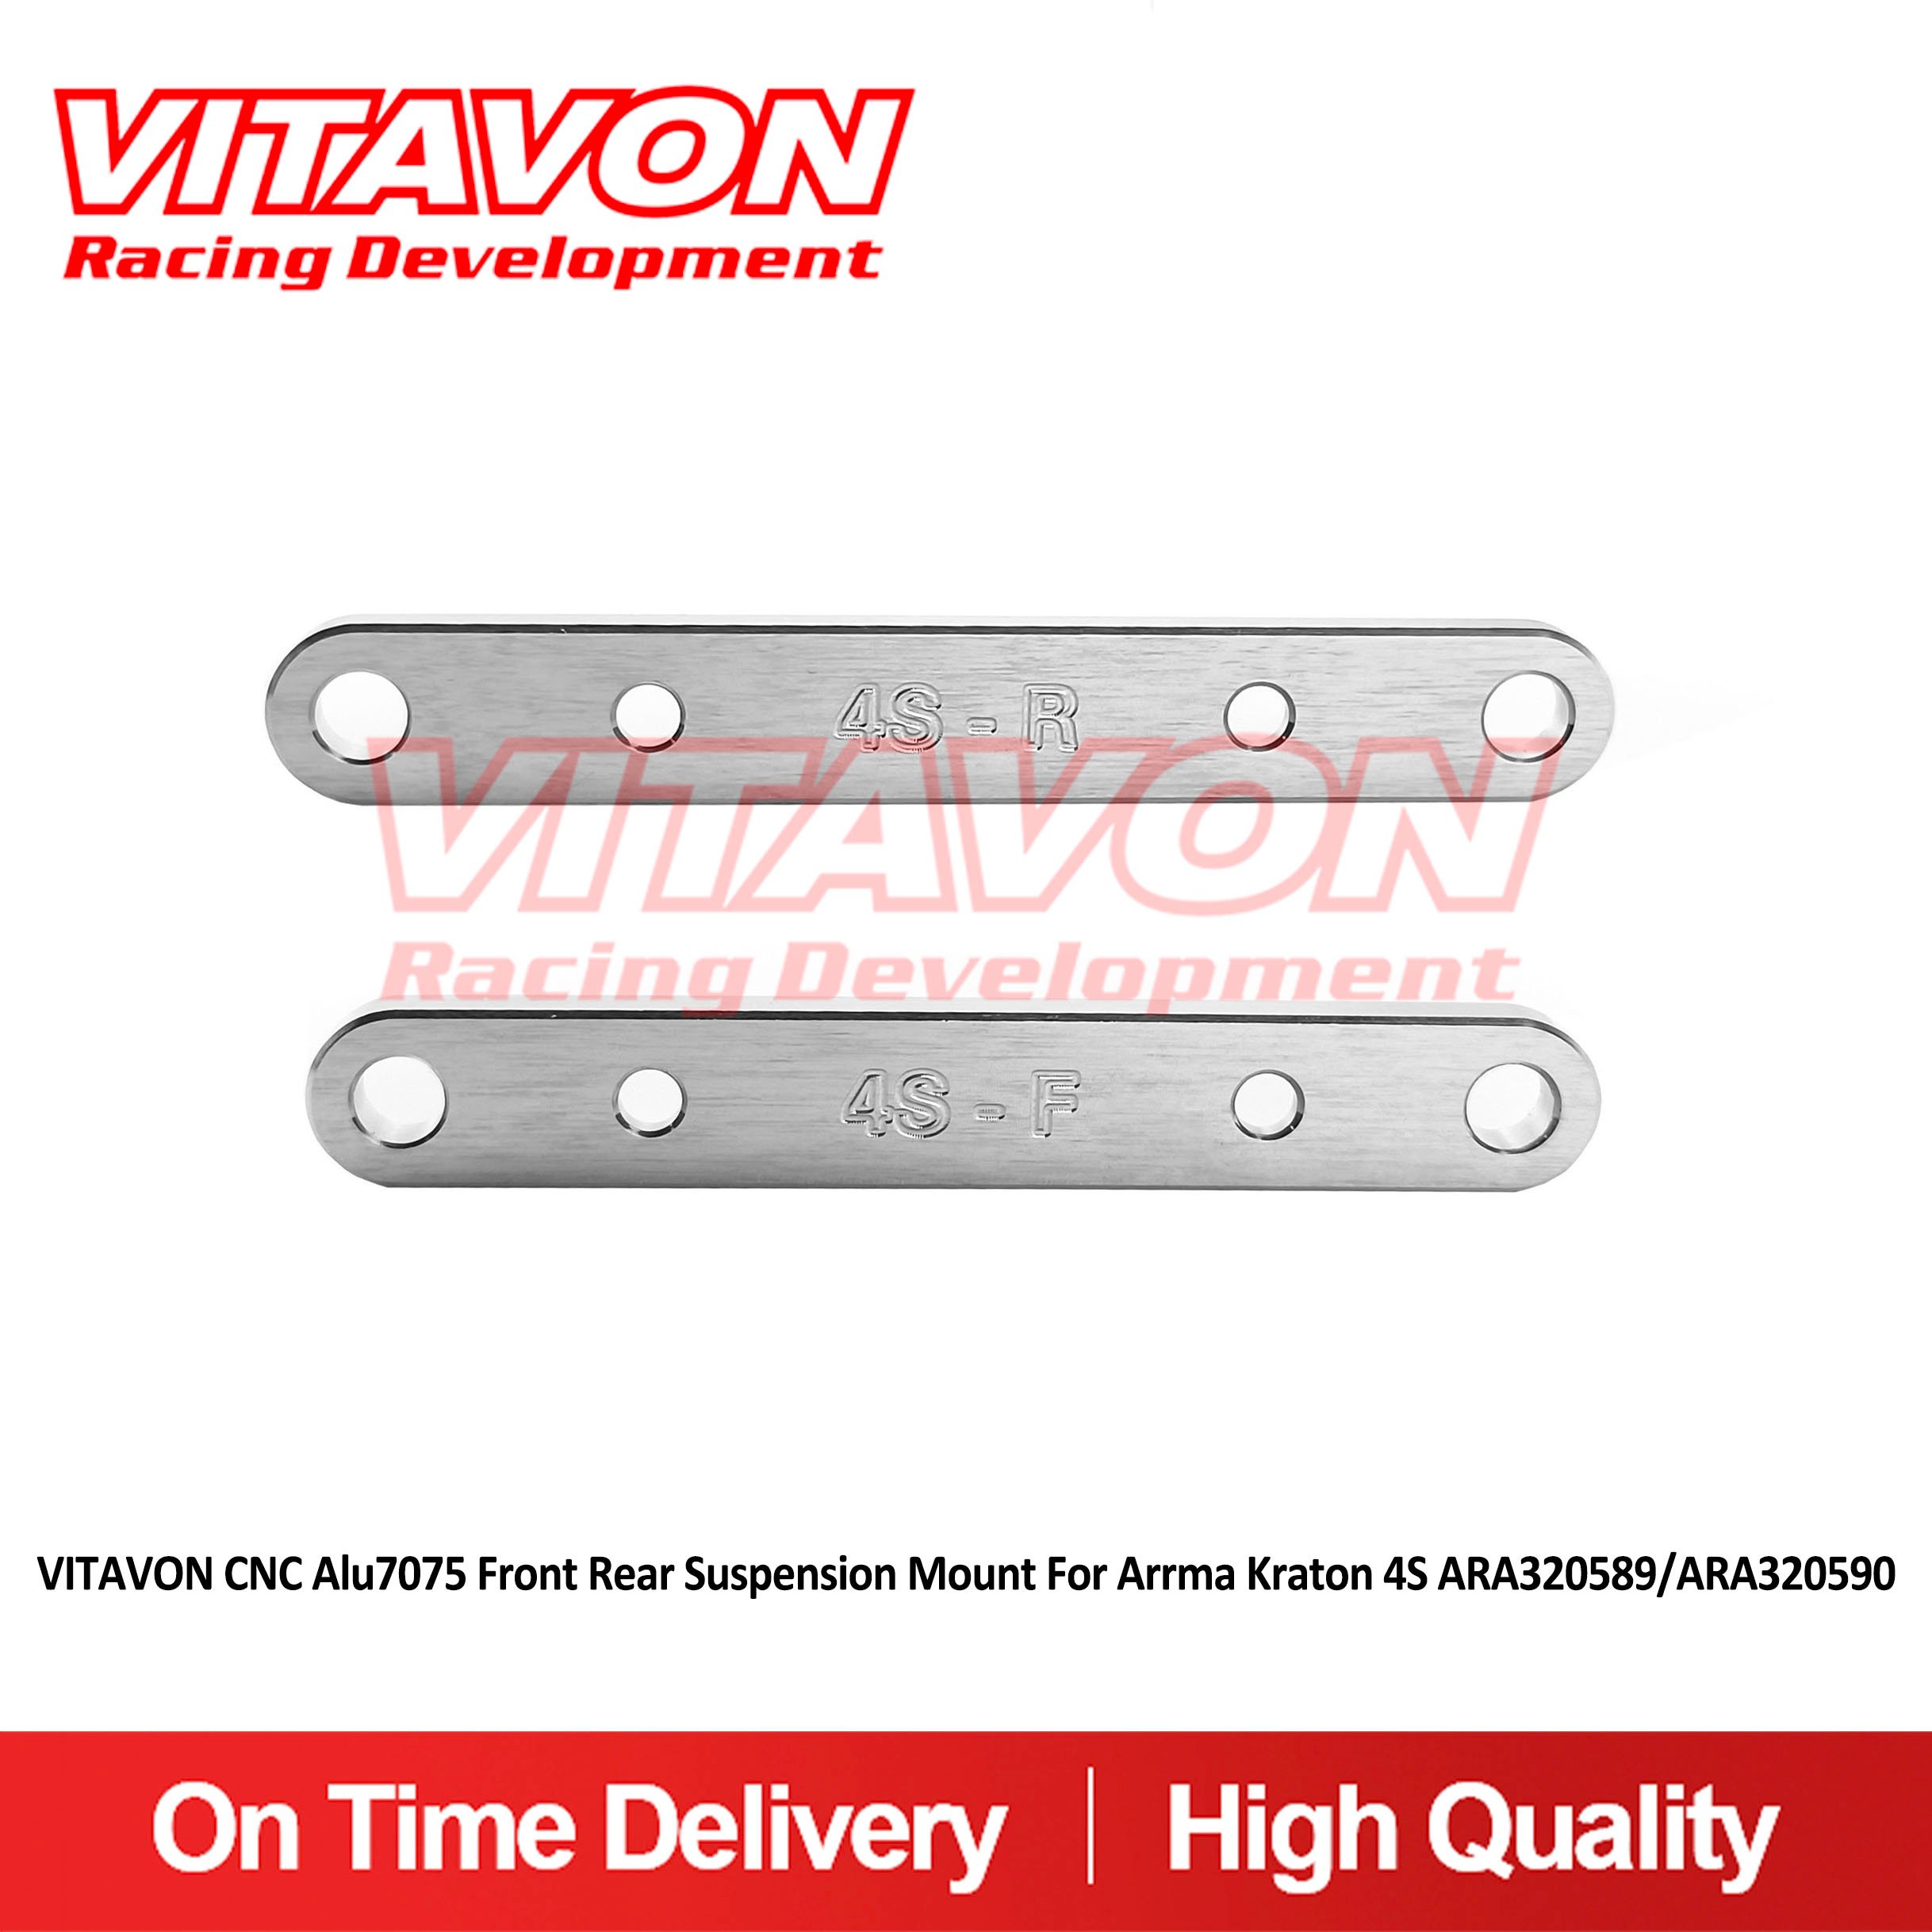 VITAVON CNC Alu7075 Front Rear Suspension Mount For Arrma Kraton 4S ARA320589/ARA320590